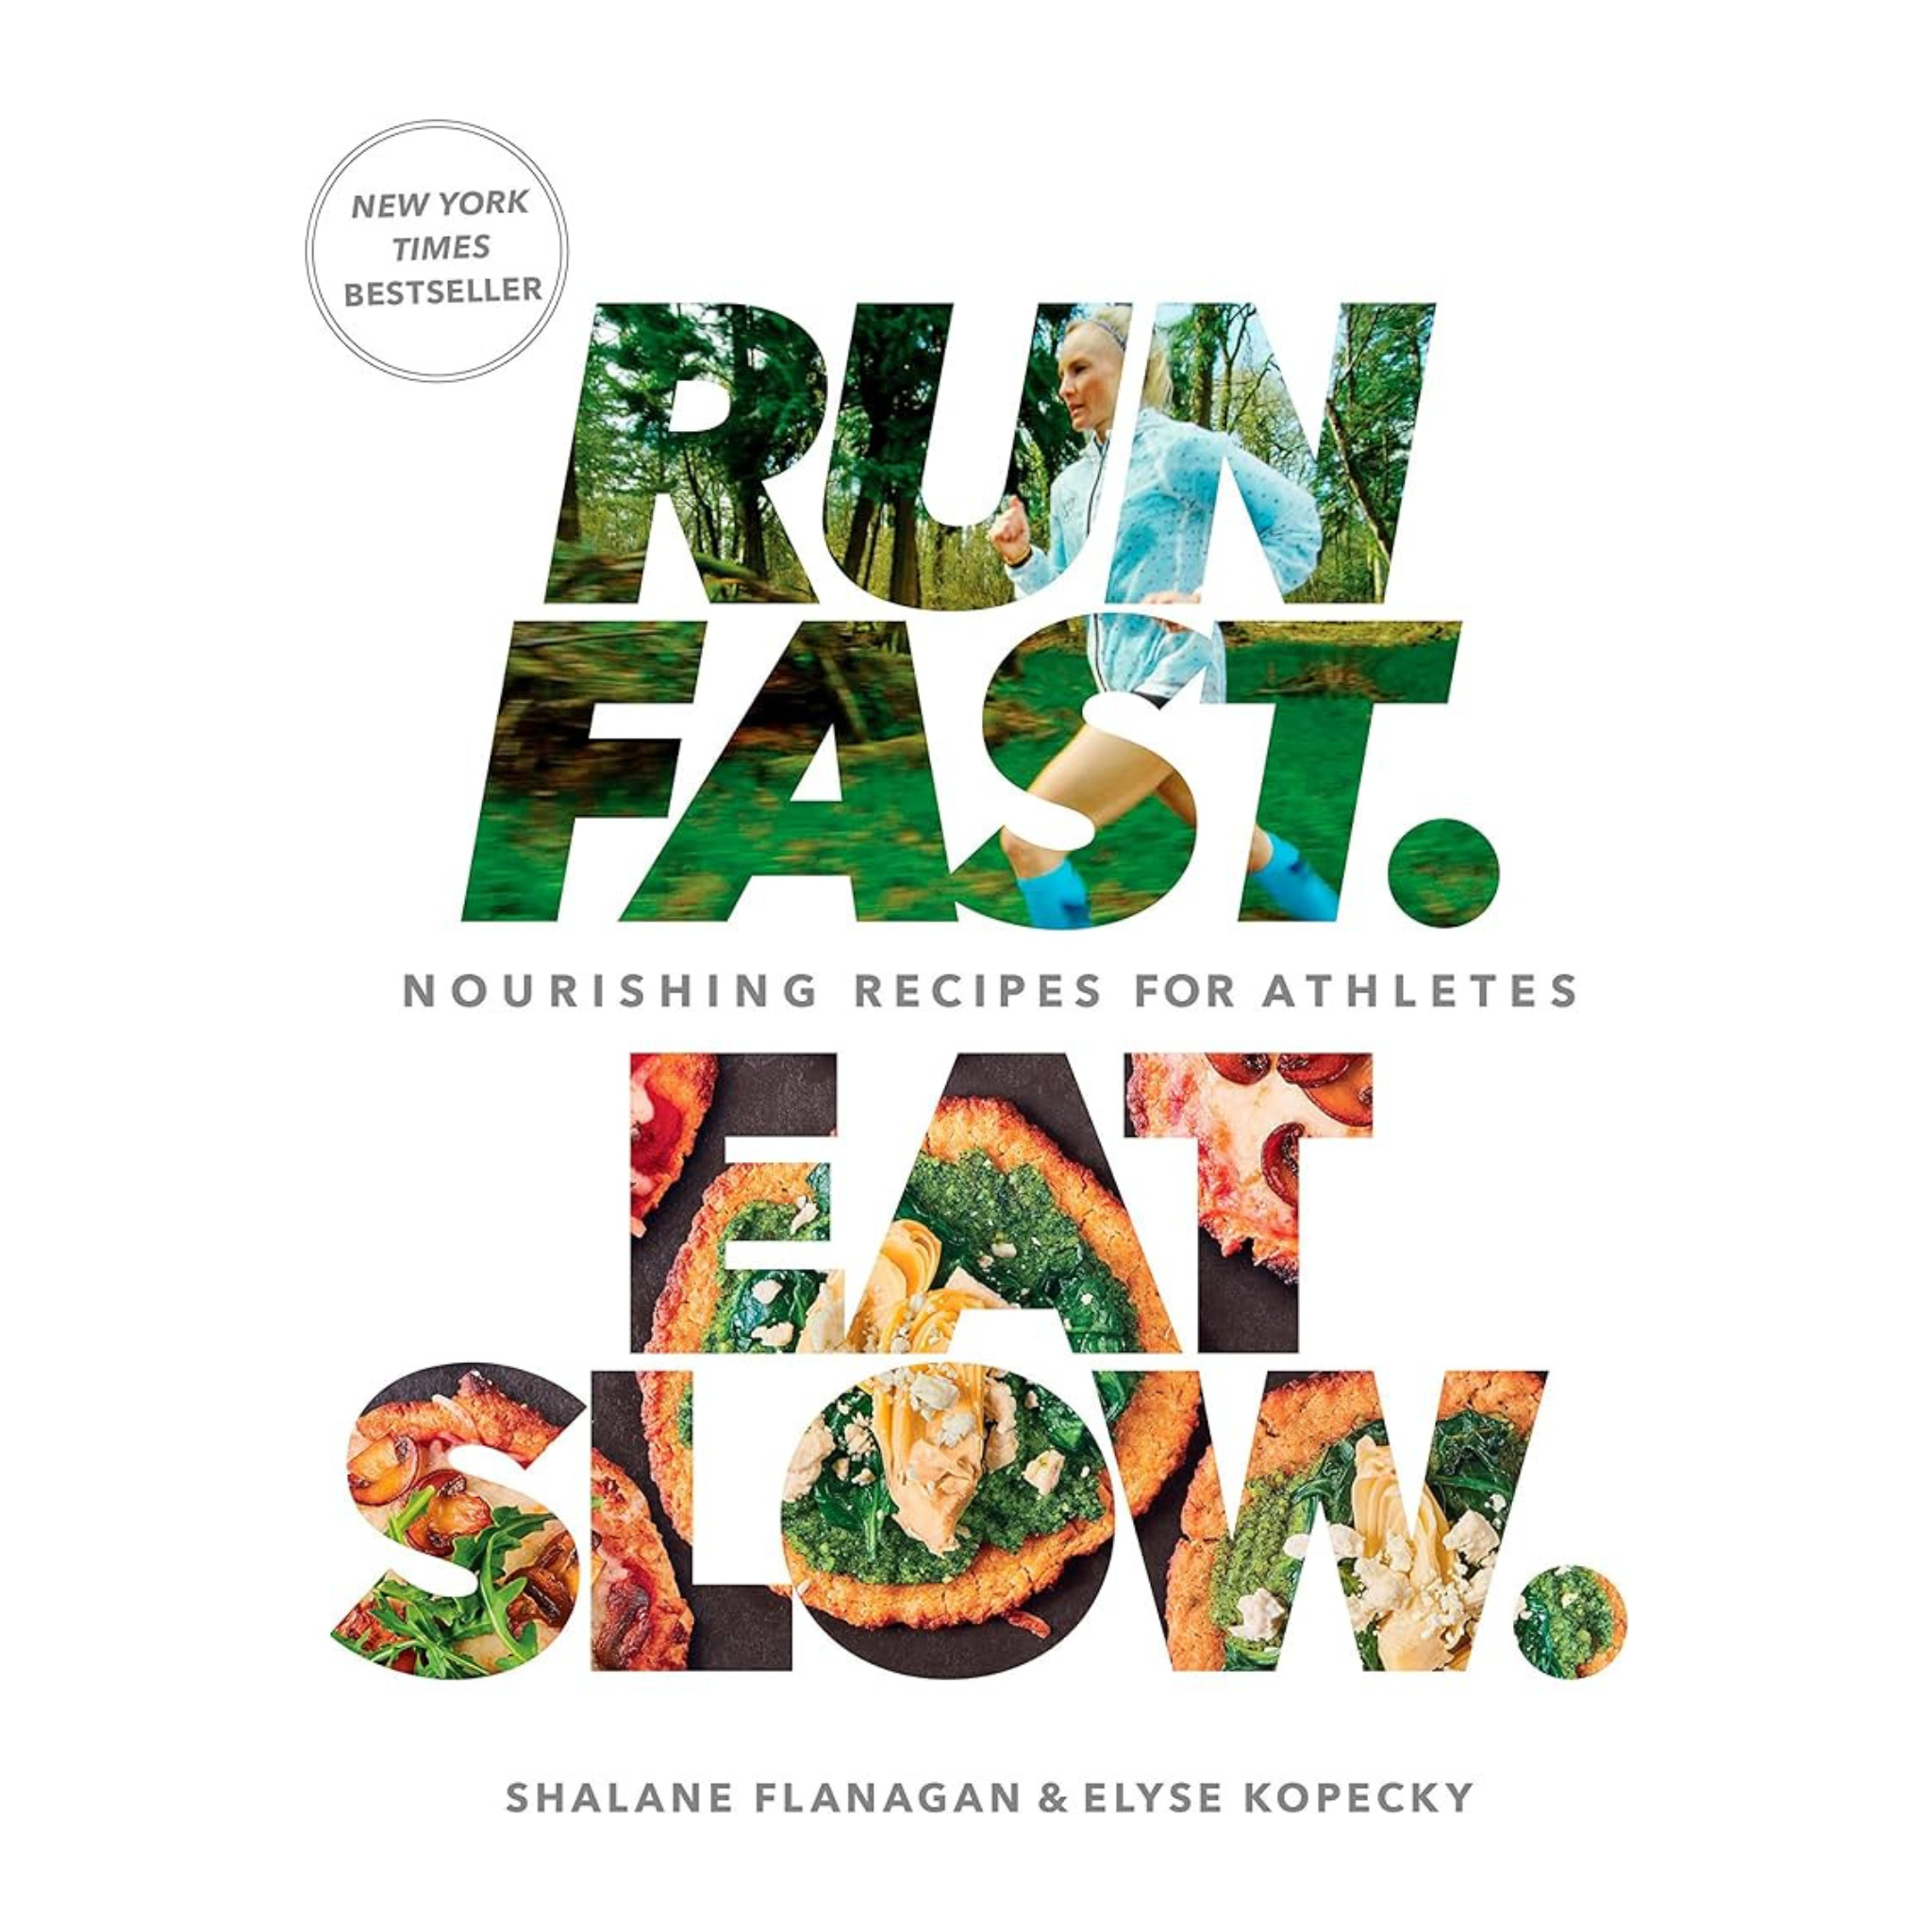 run fast eat slow cookbook